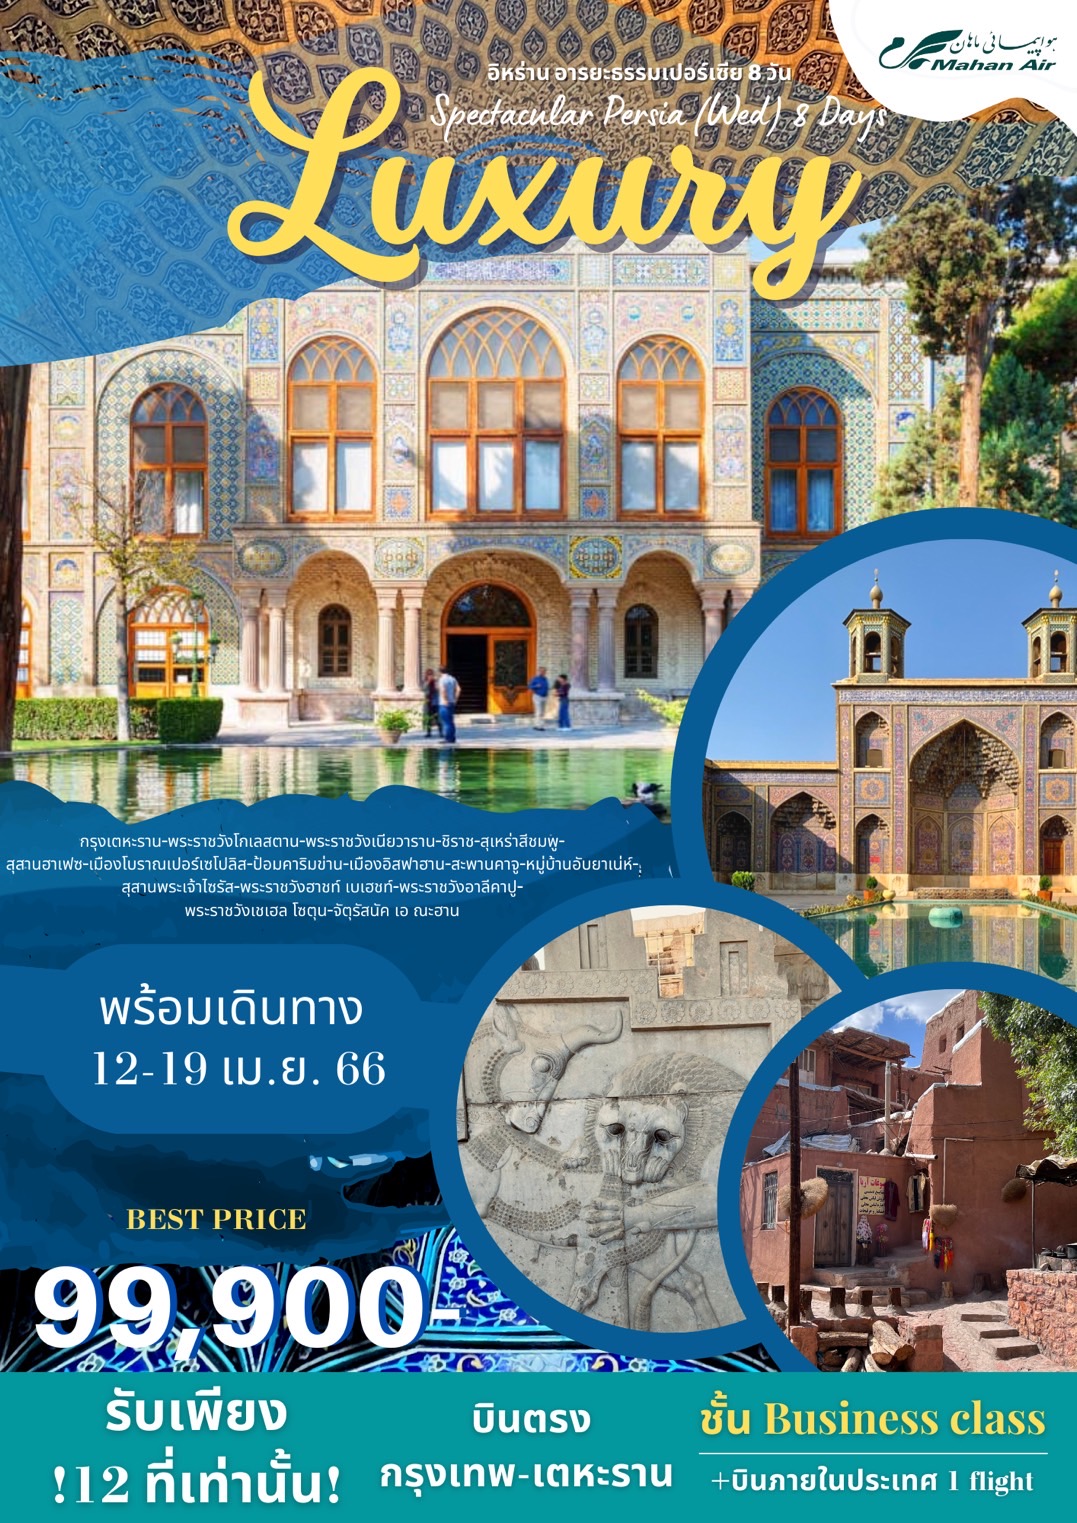 Luxury Spectacular Persia (Wed) 8 Days อิหร่าน อารยะธรรมเปอร์เซีย 8 วัน